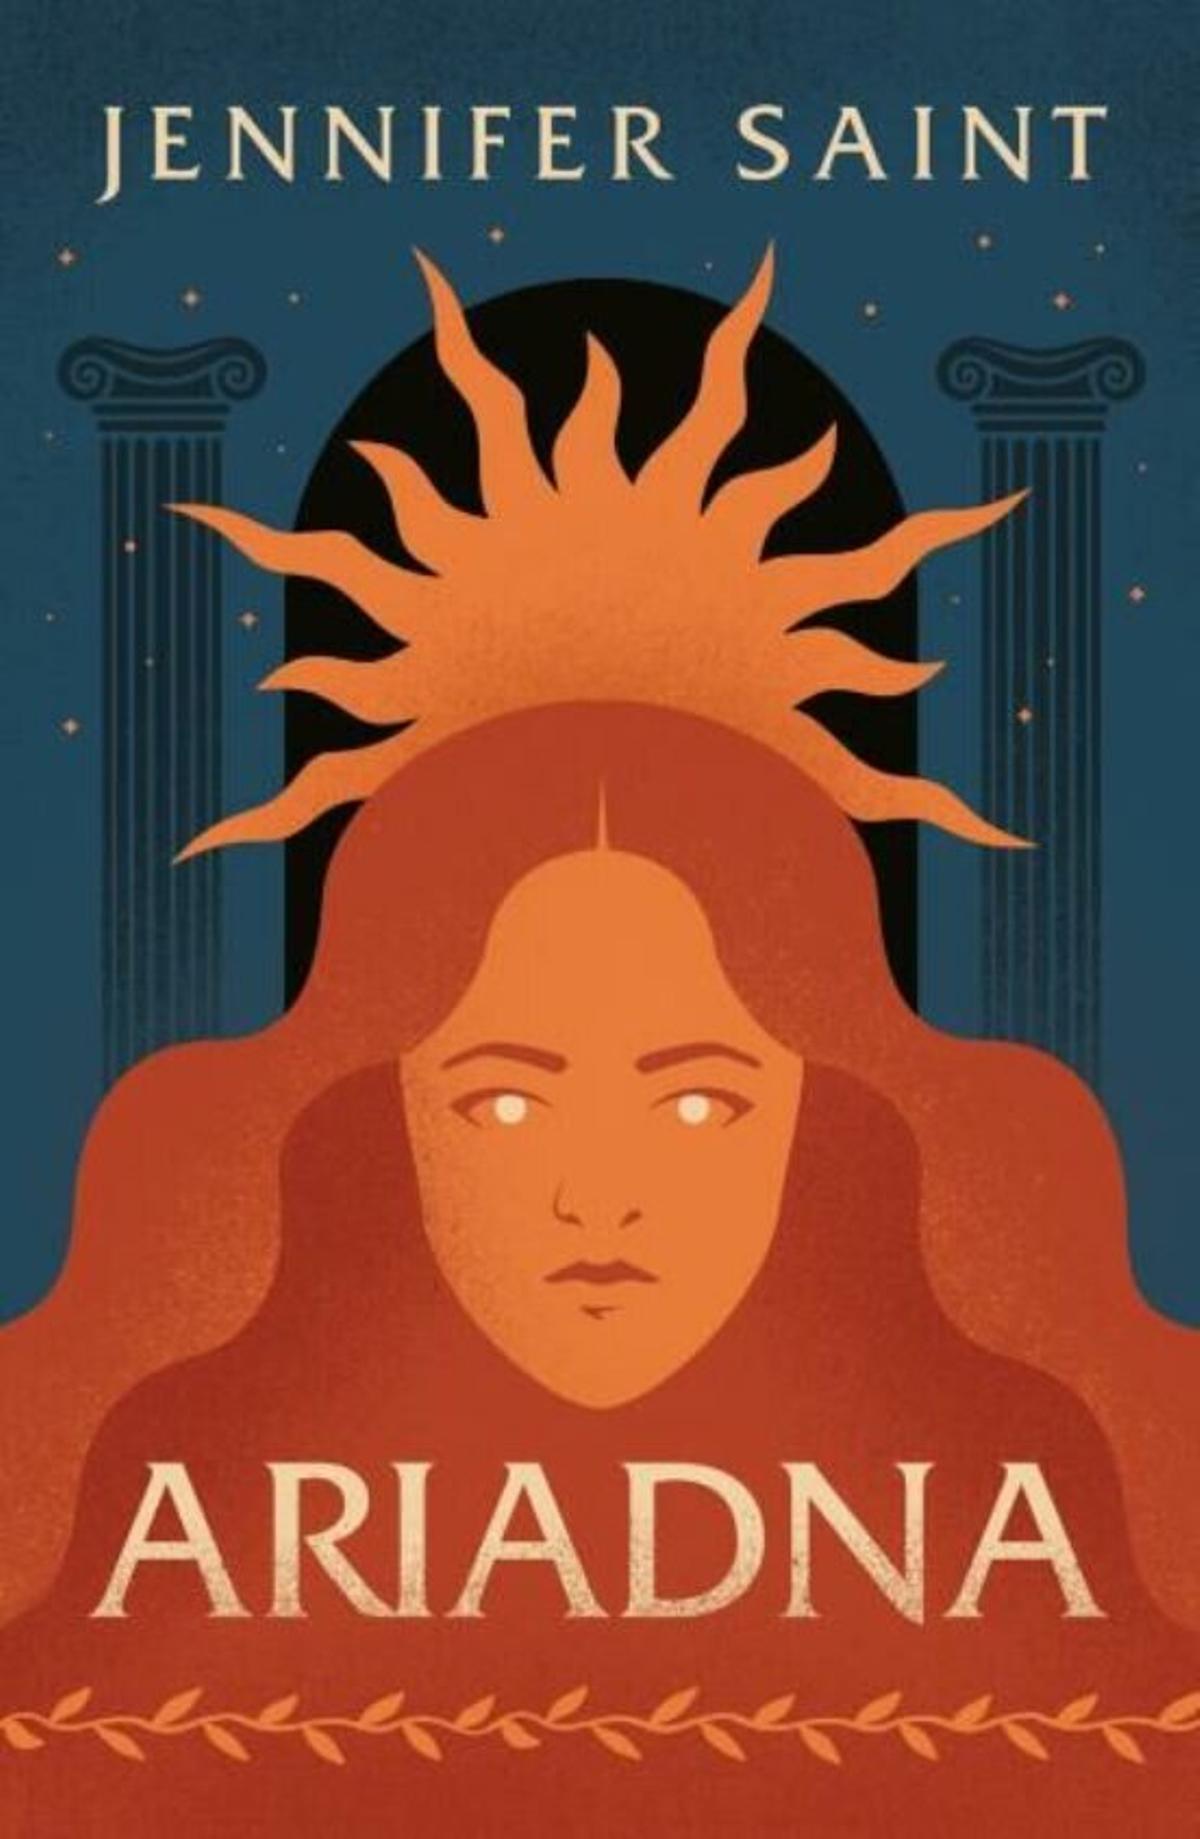 Portada de 'Ariadna', de Jennifer Saint.